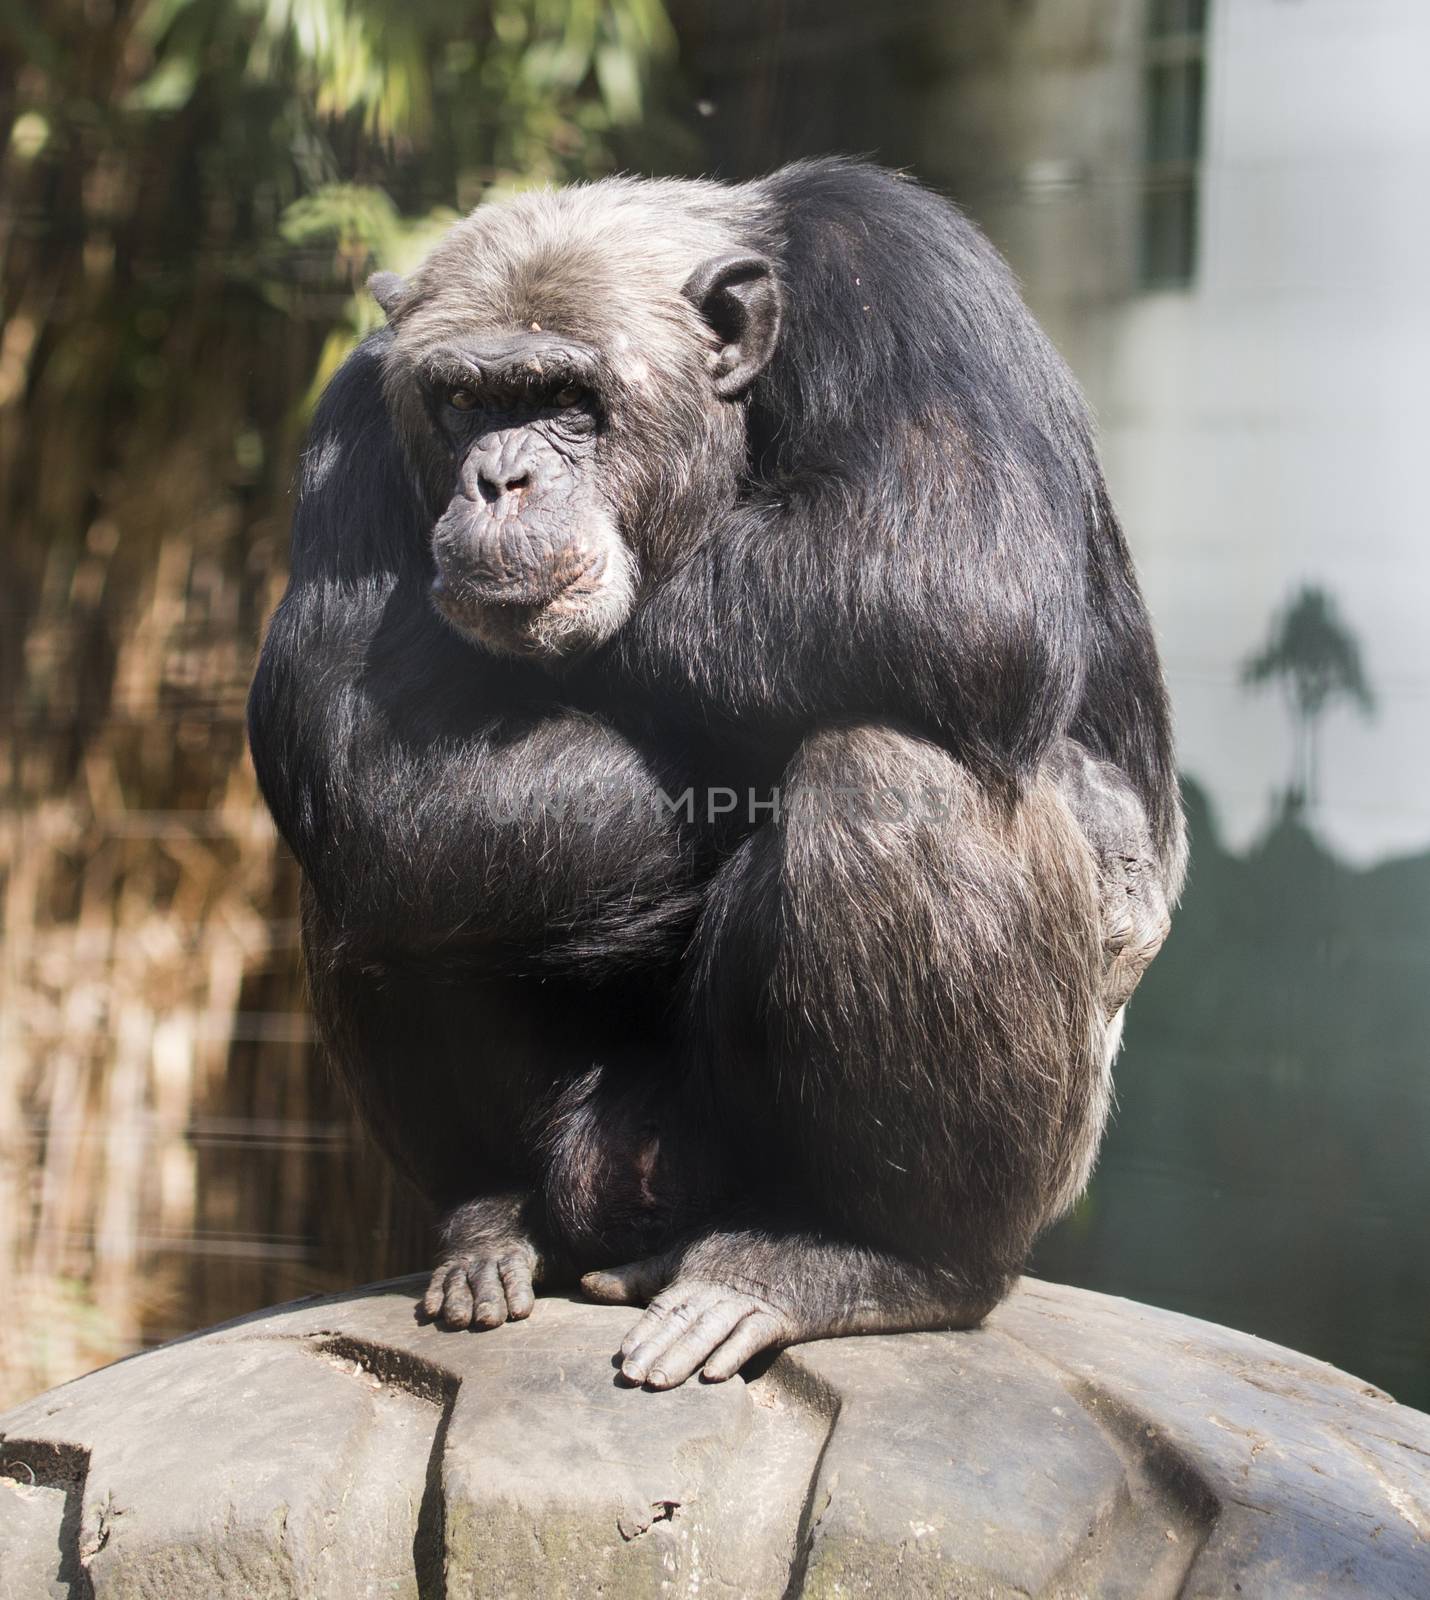 Monkey, sitting, arms crossed